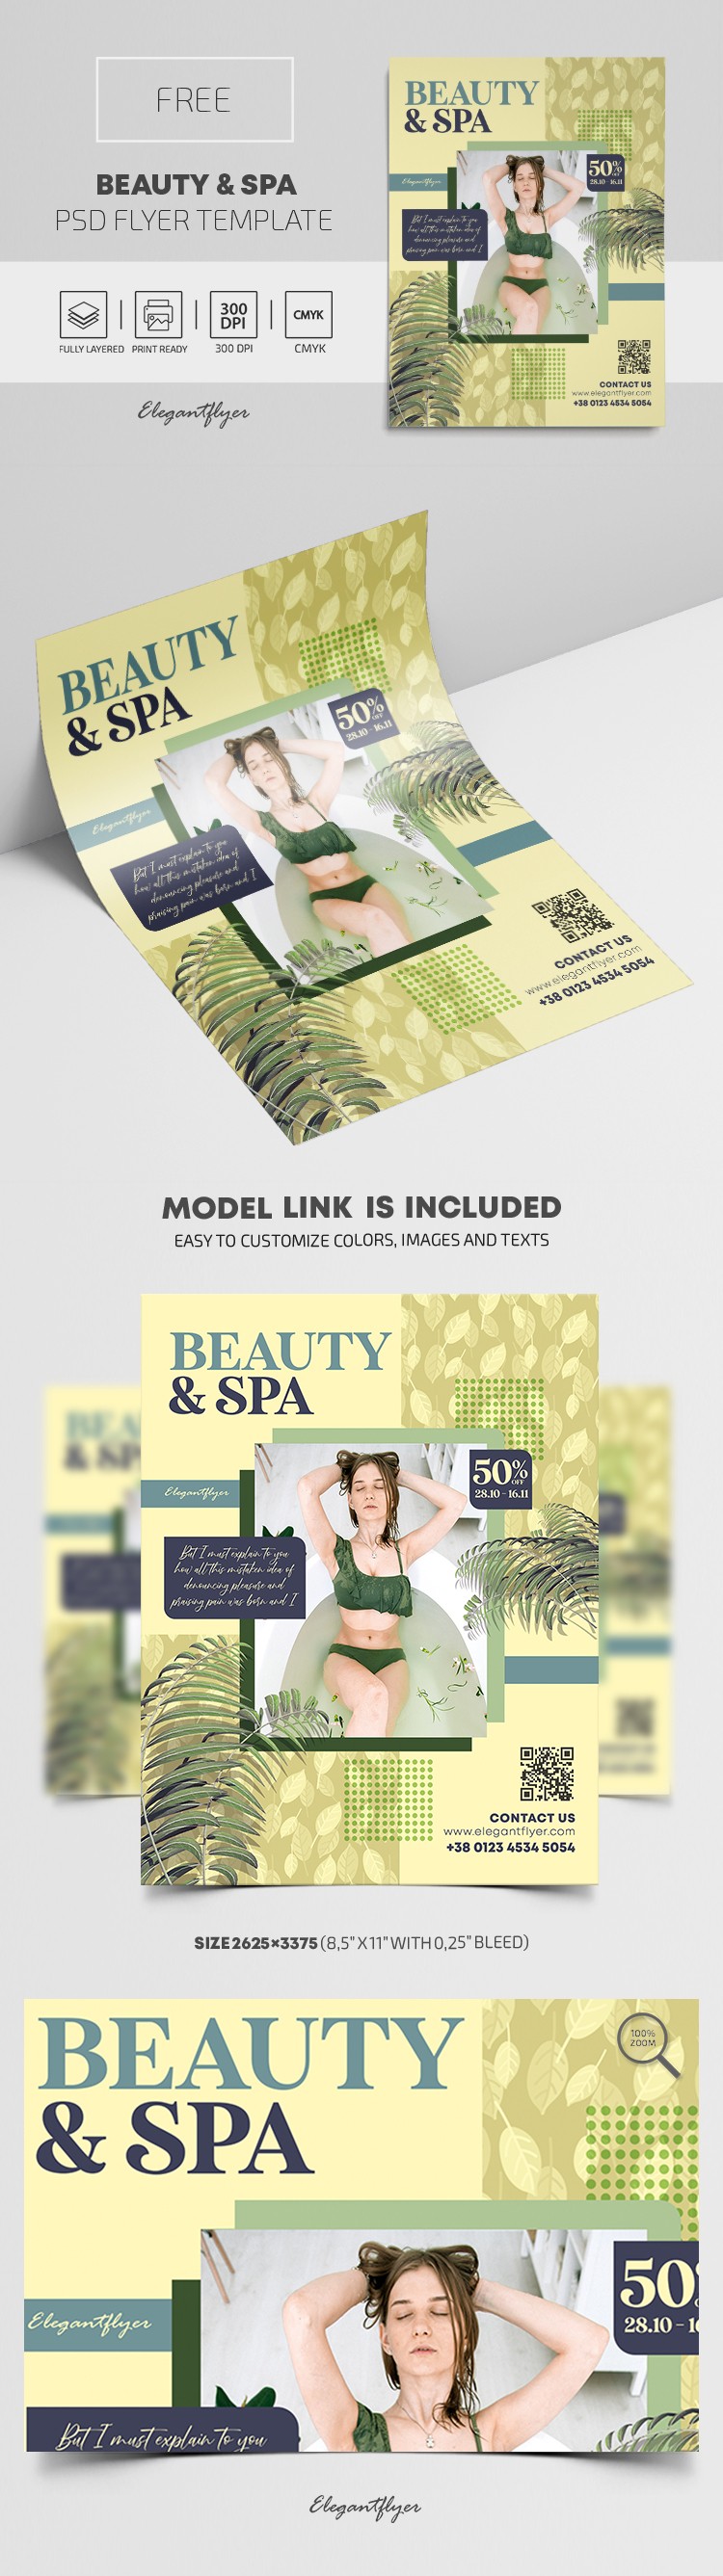 Beauty & Spa Flyer by ElegantFlyer